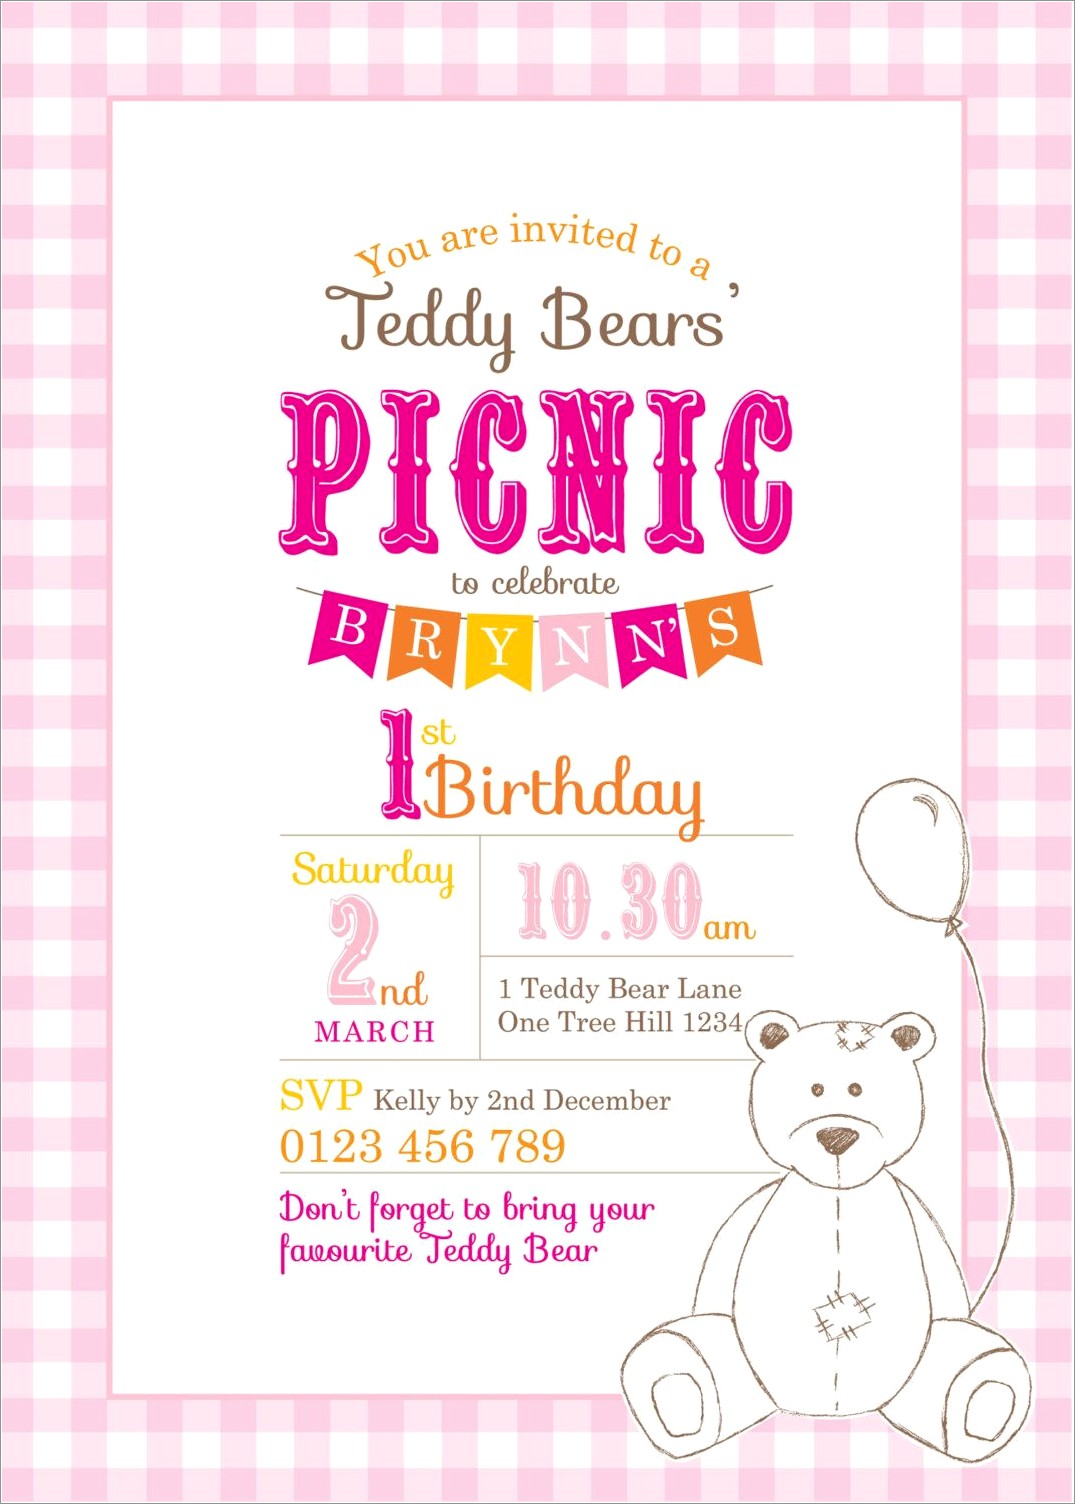 Teddy Bear Picnic Invitations